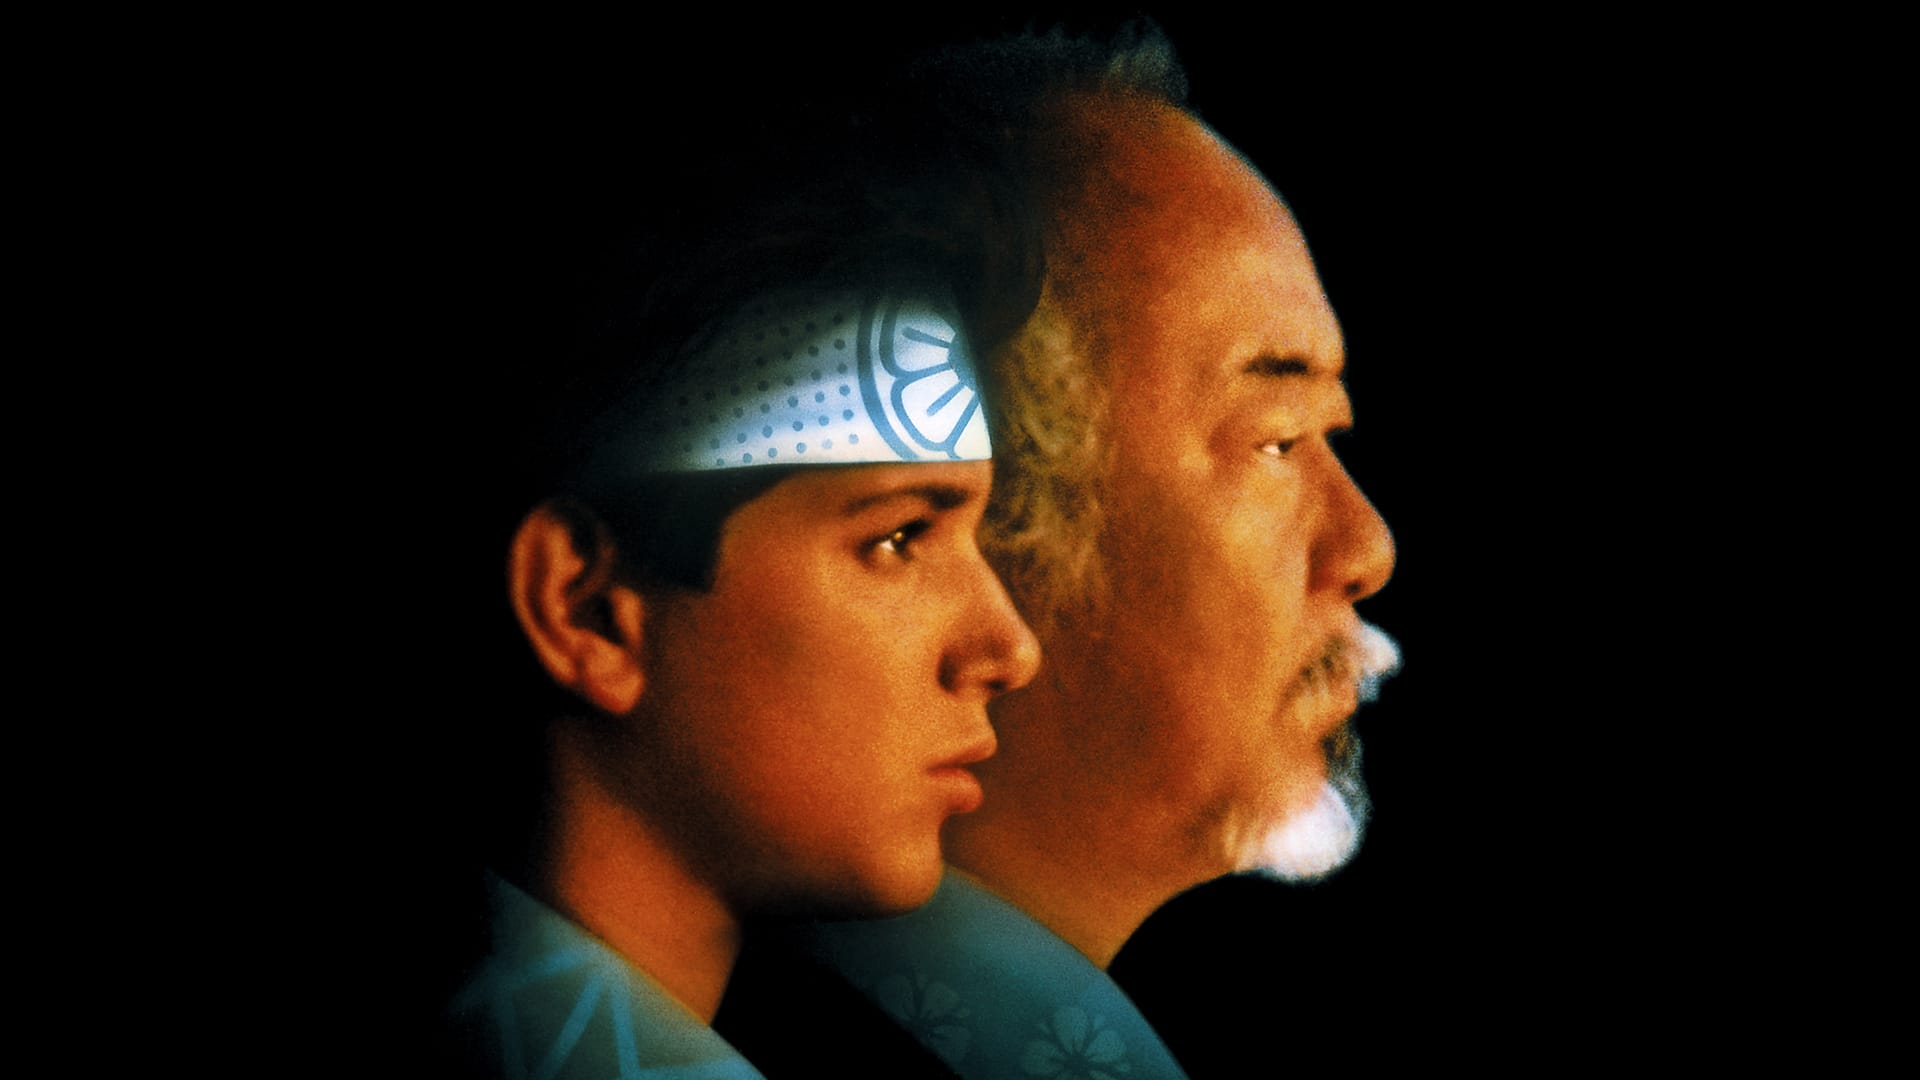 Watch The Karate Kid Part II Online | Stream Full Movies